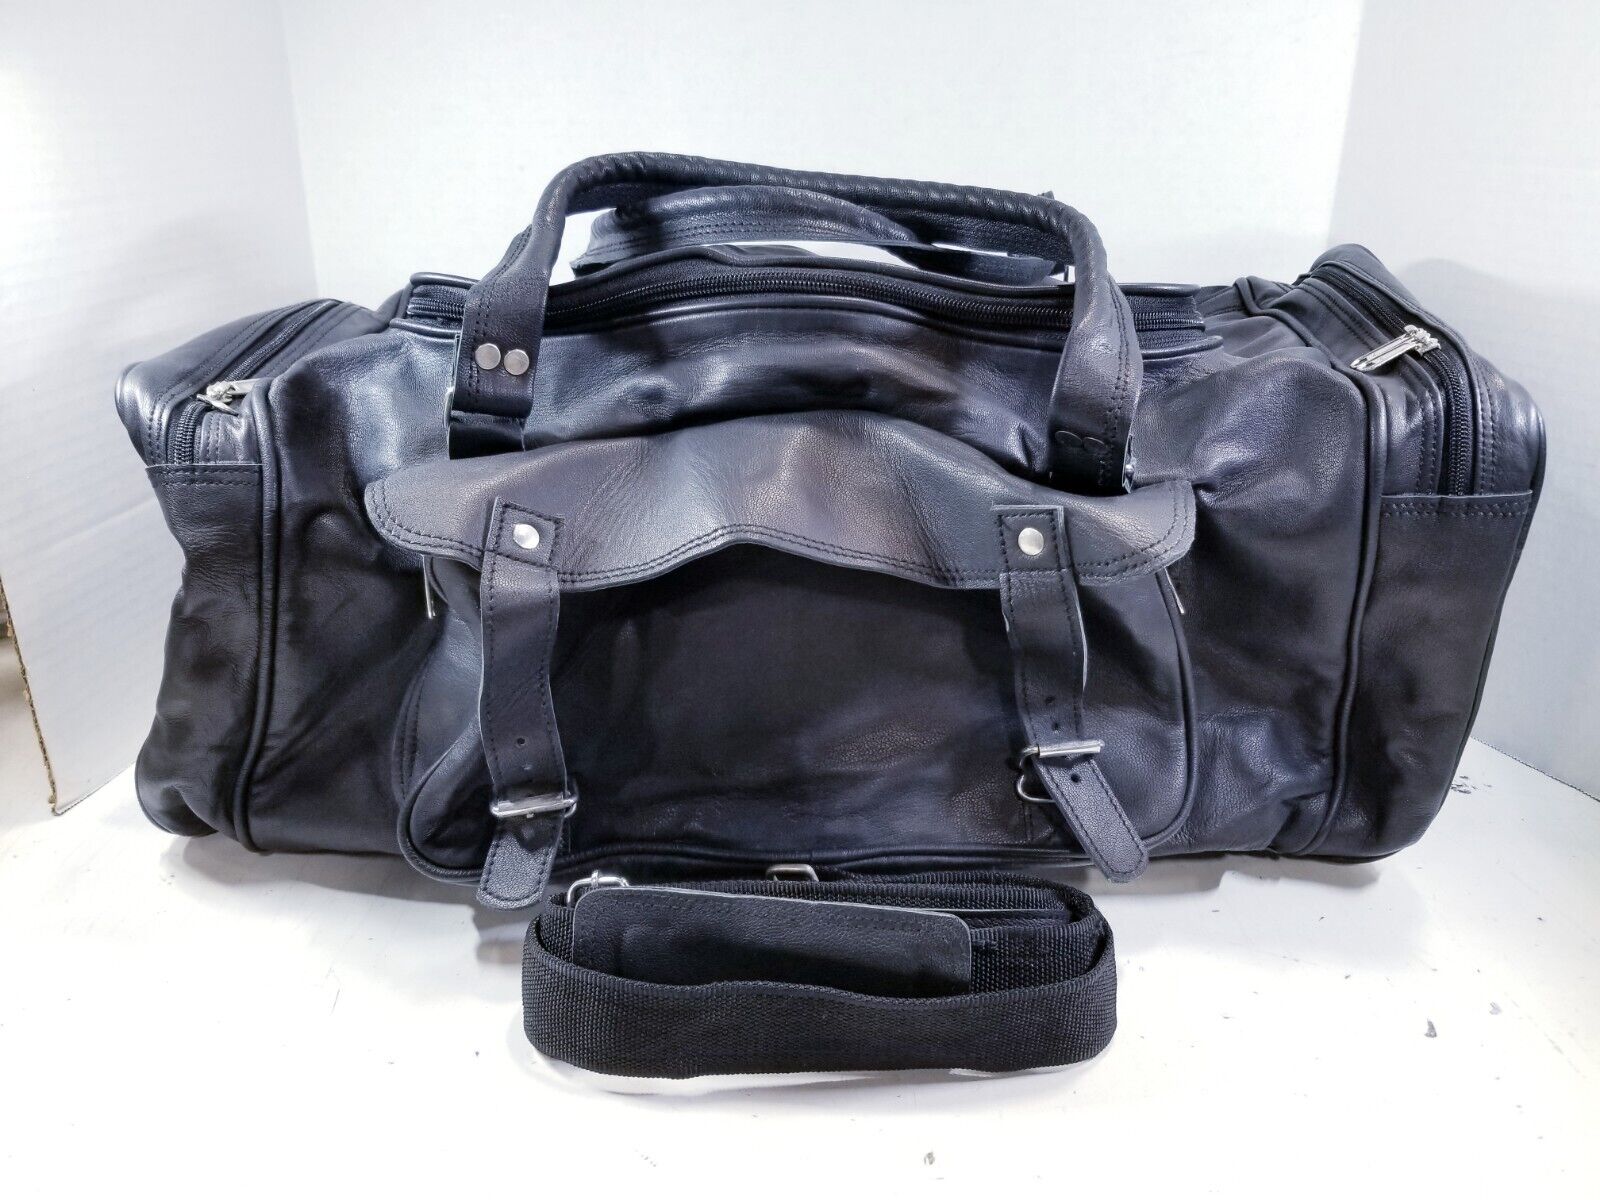 Black Leather Travel Duffel Bag - Classy 22